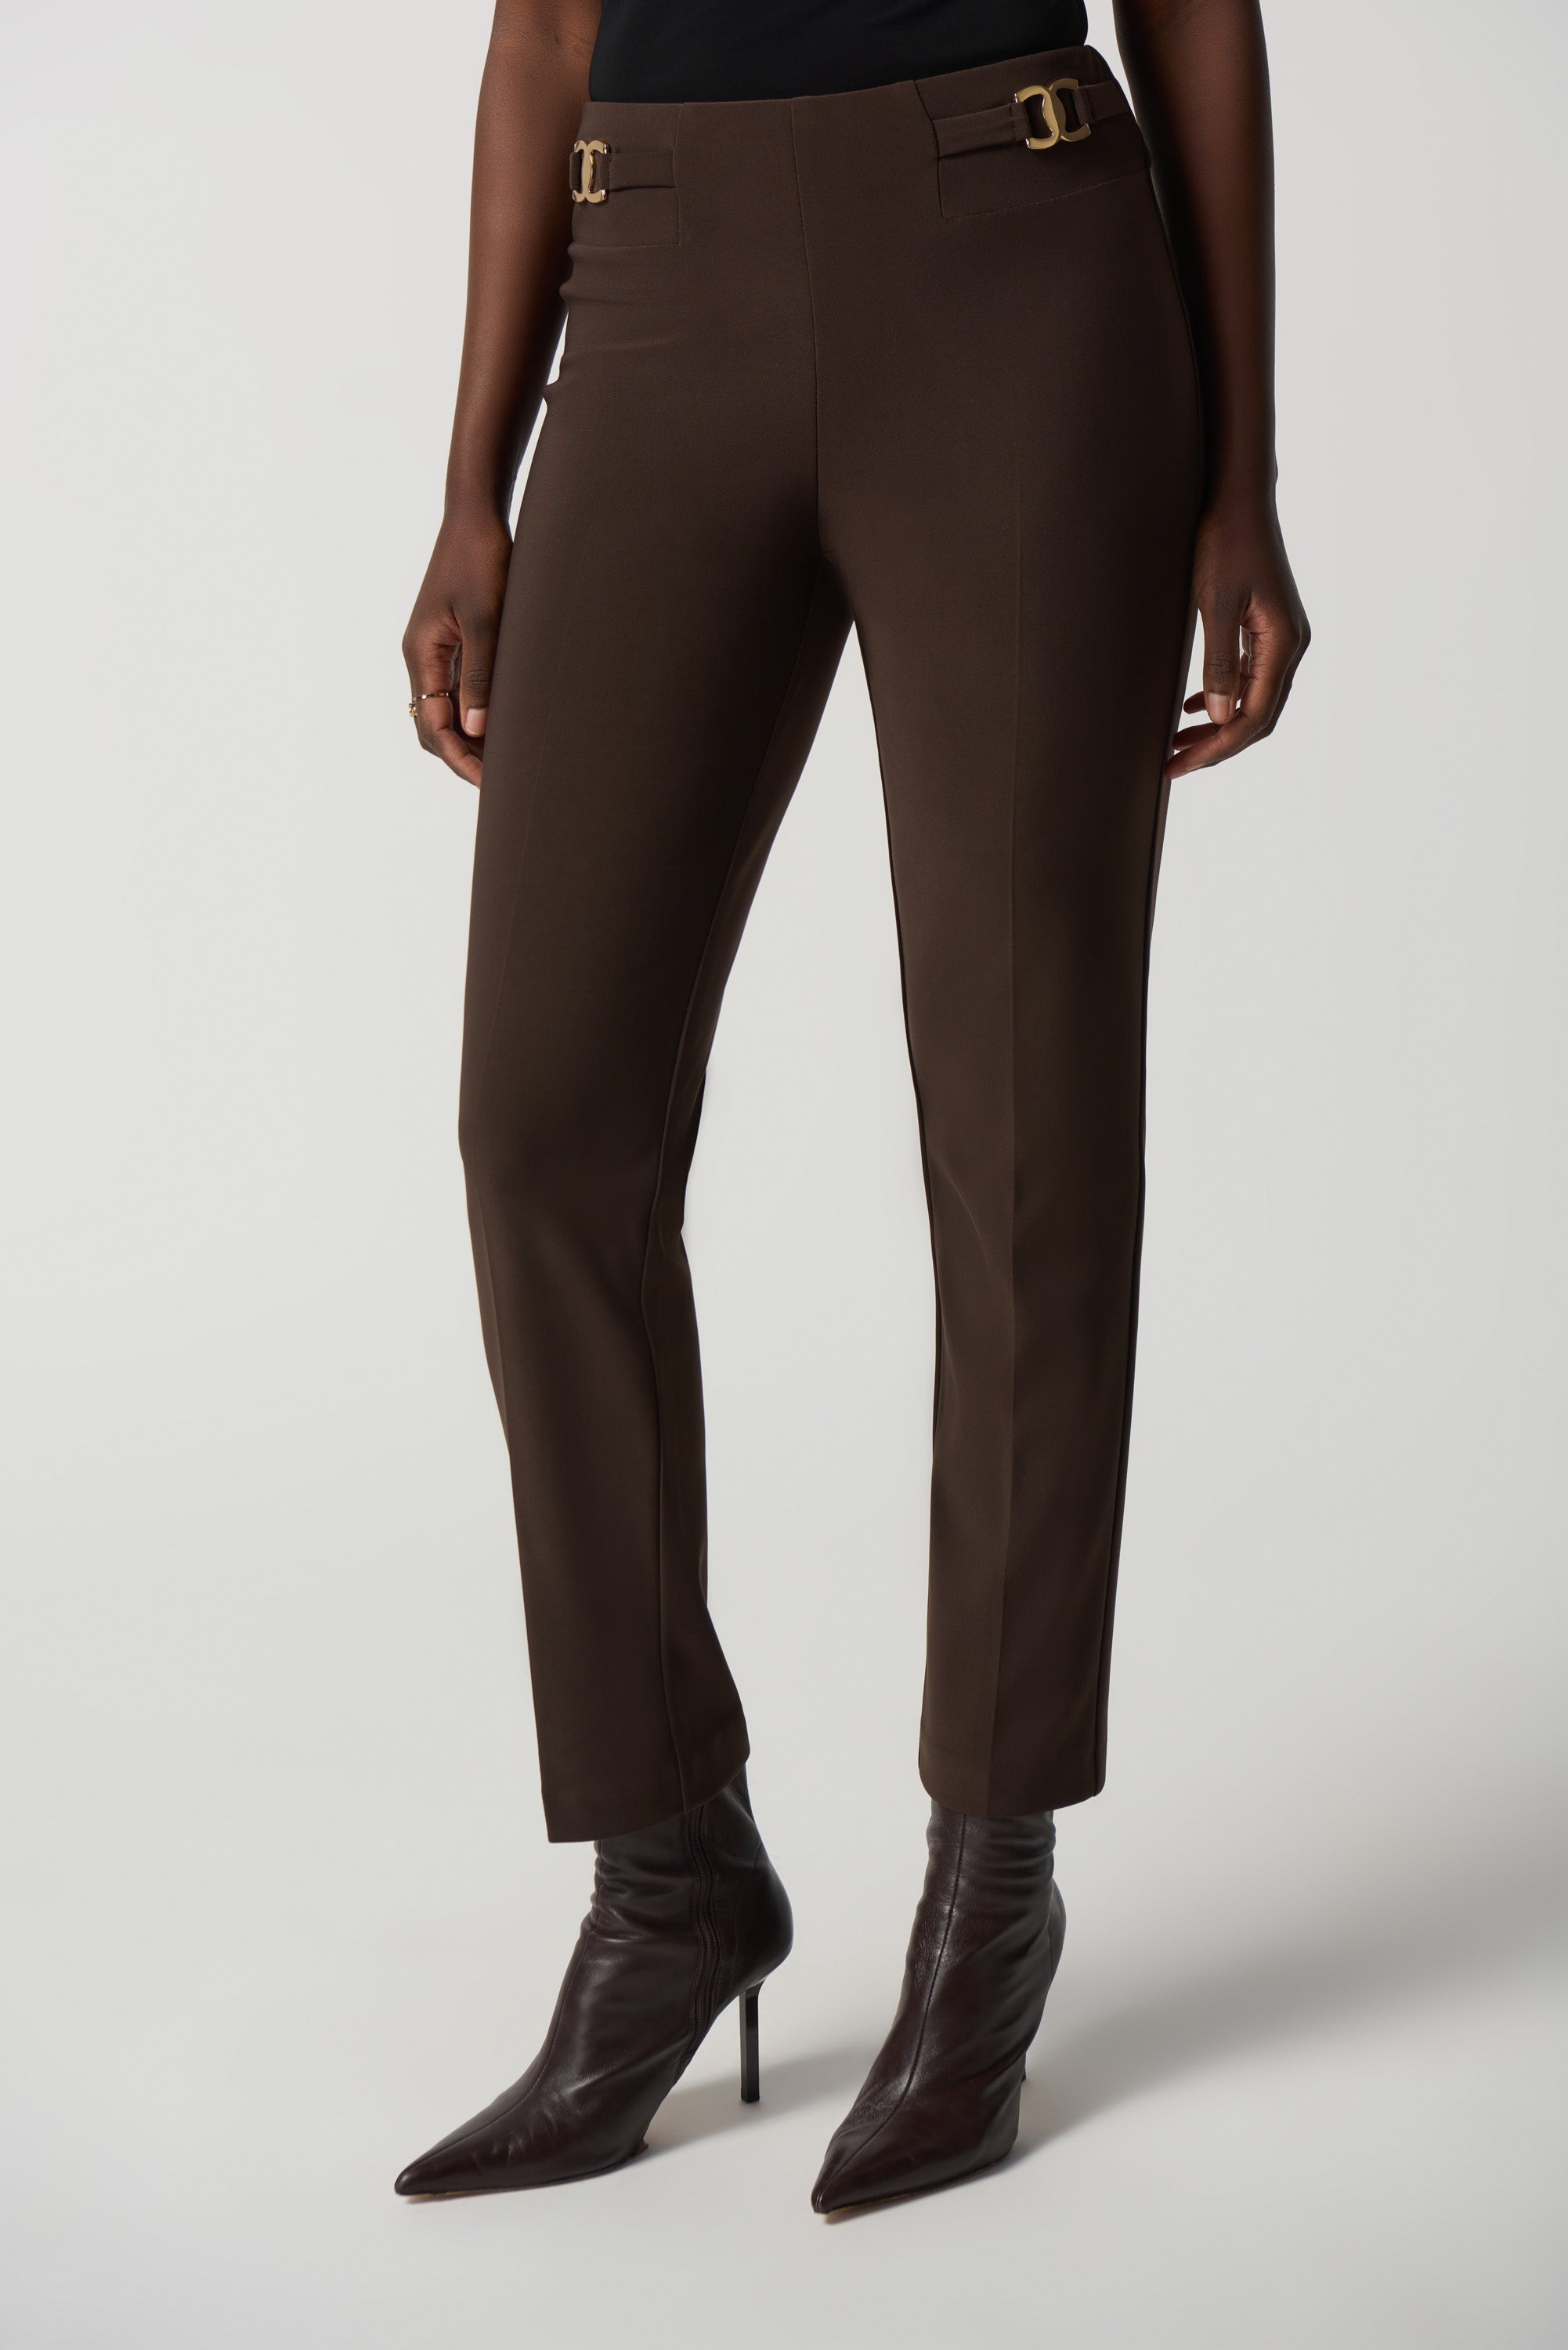 Joseph Ribkoff Black Bonded Silk Straight-Leg Pants Style 233180